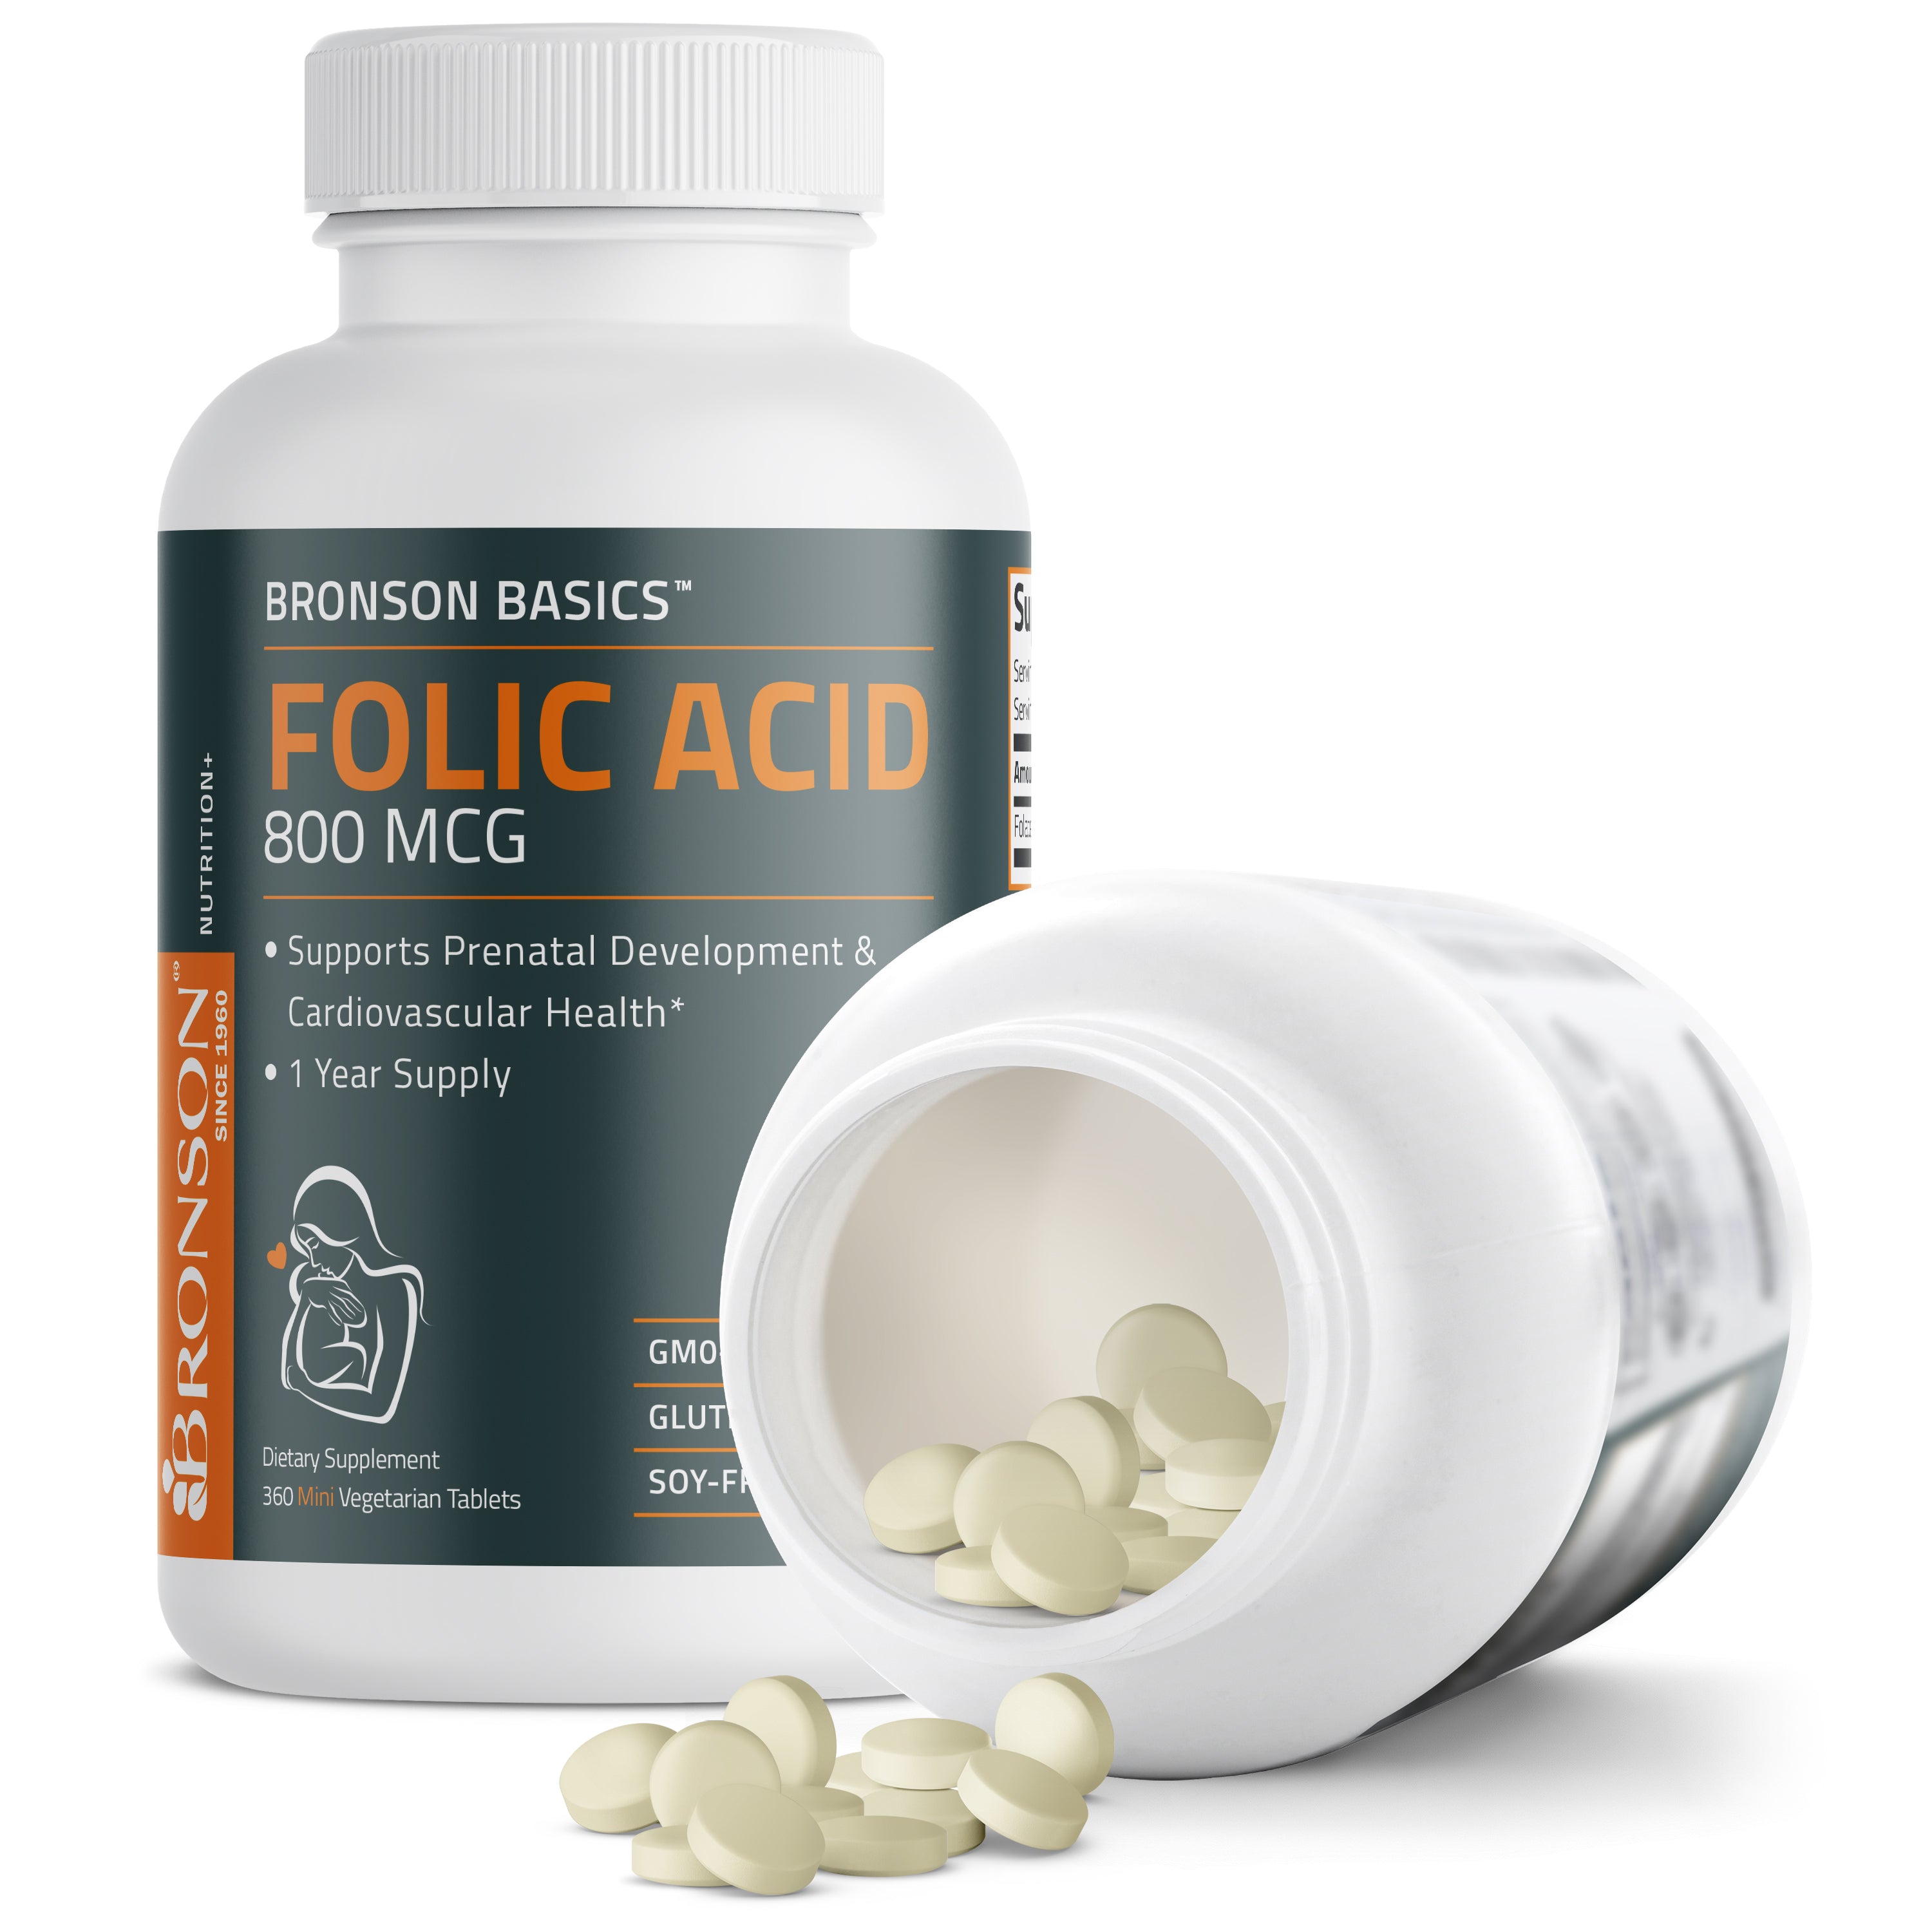 Folic Acid 800 MCG, 360 Tablets view 4 of 6